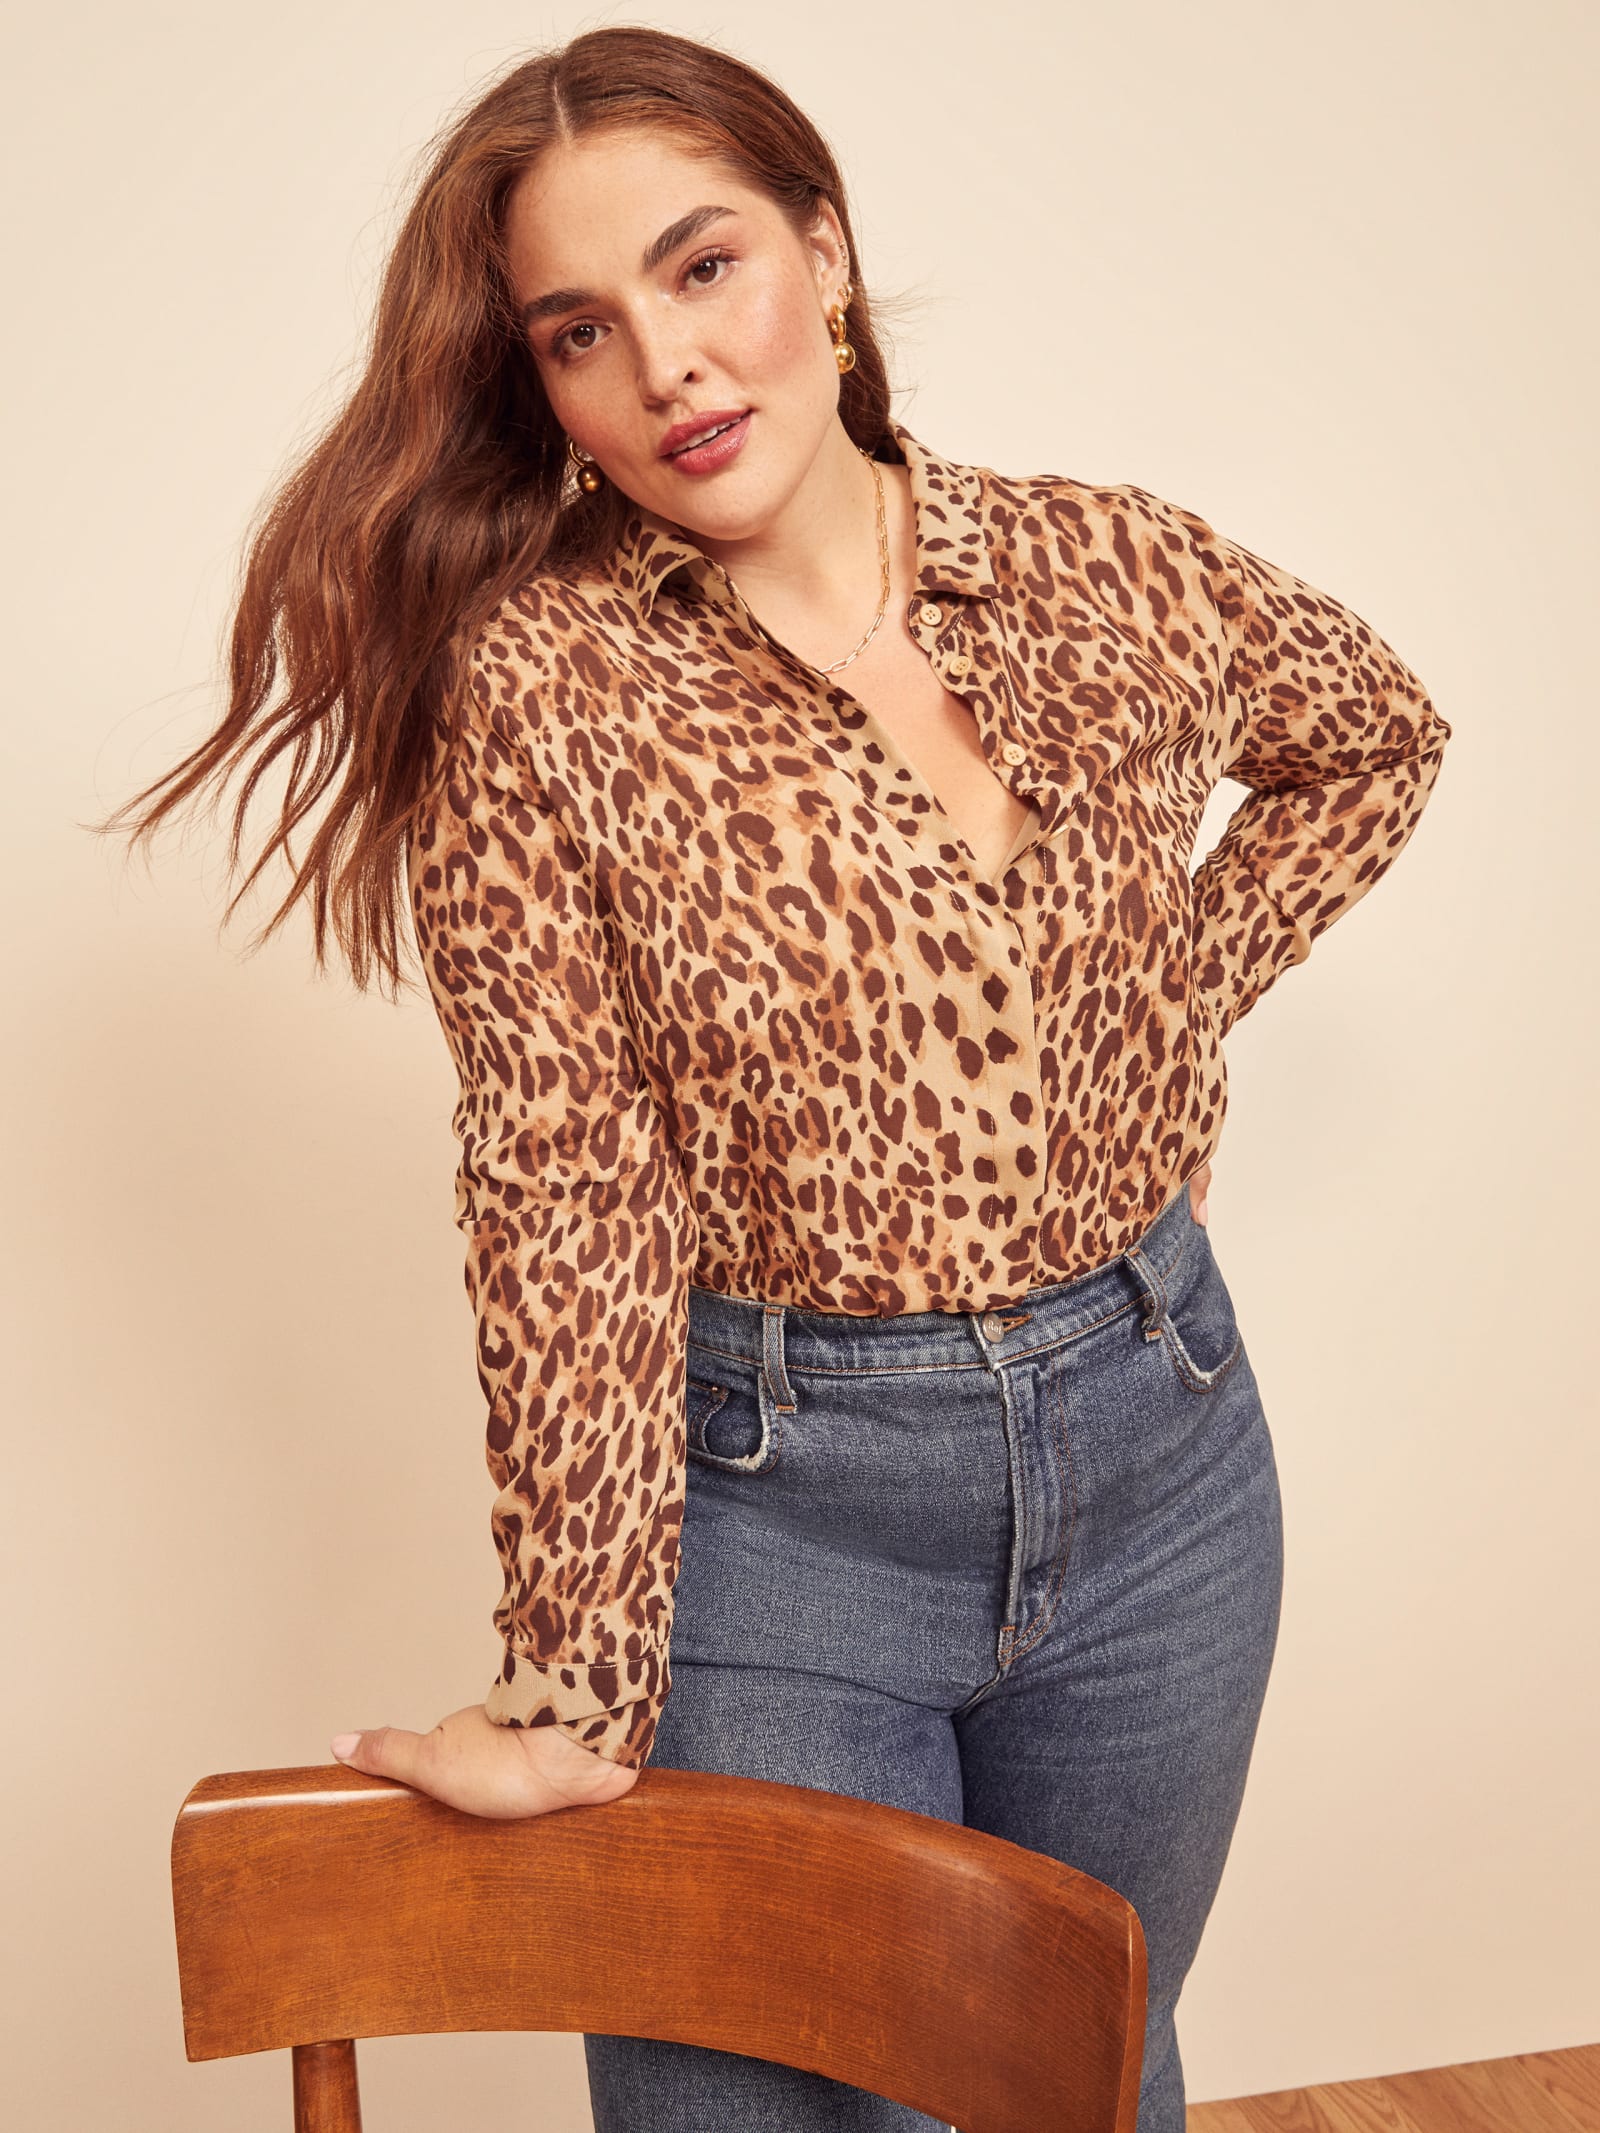 fashionable animal print blouse